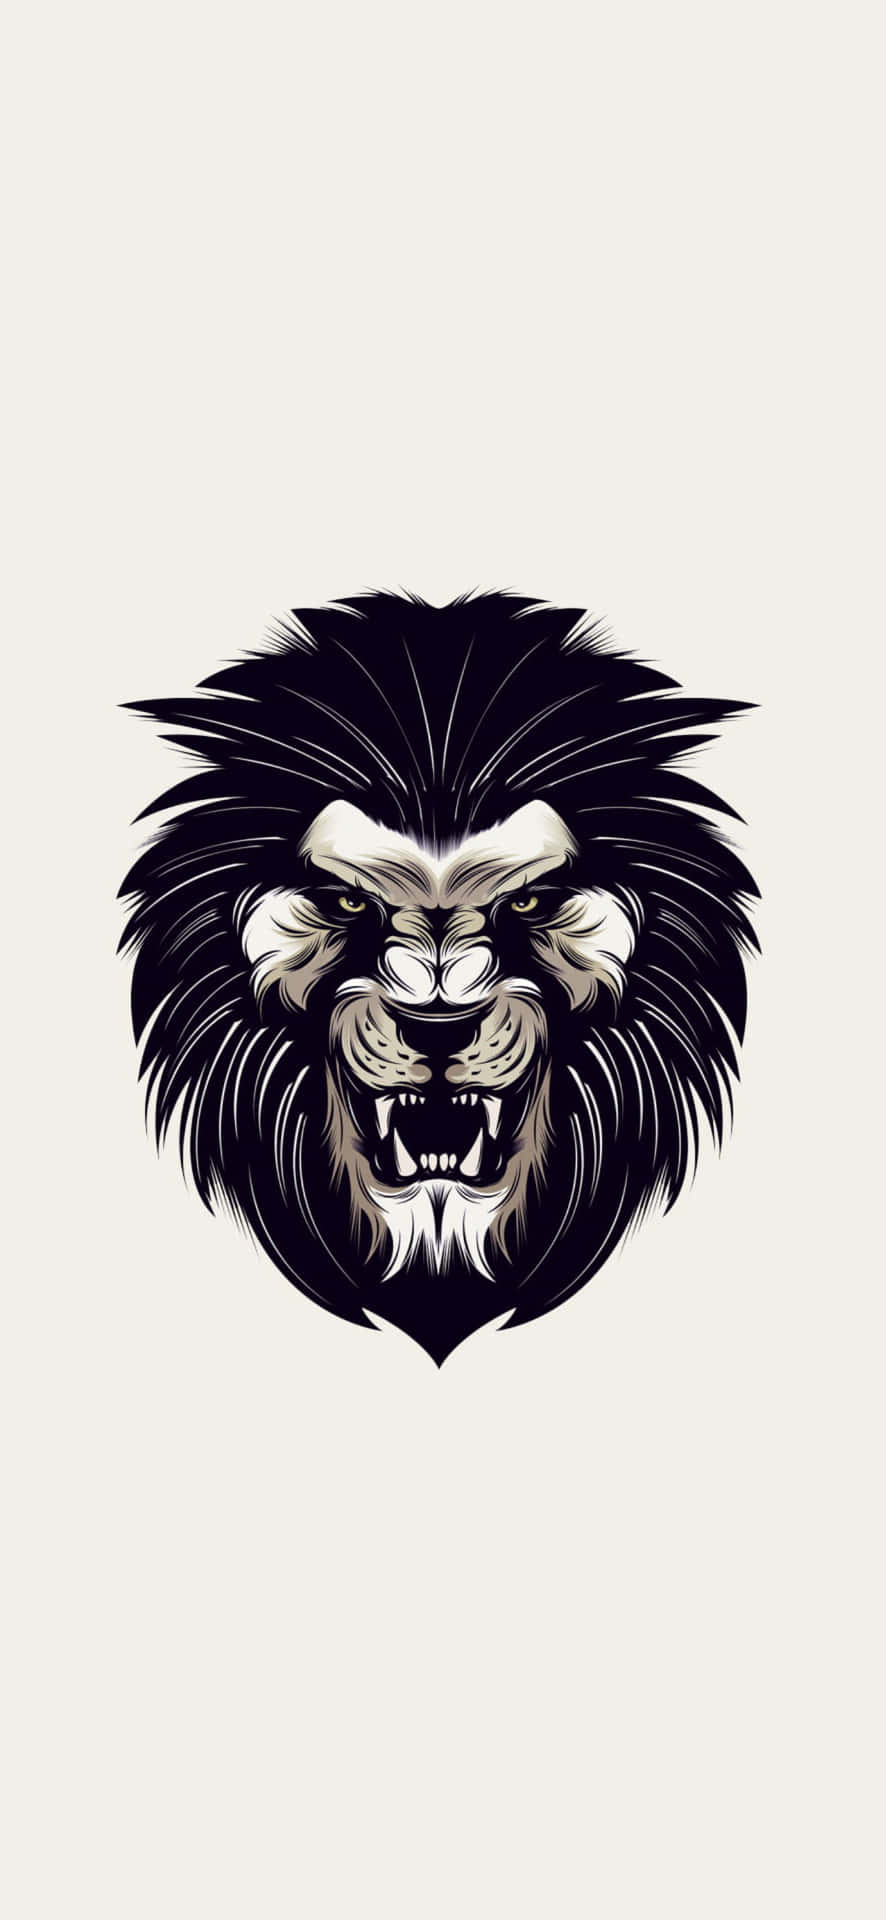 Majestic Black Lion Roaring Background